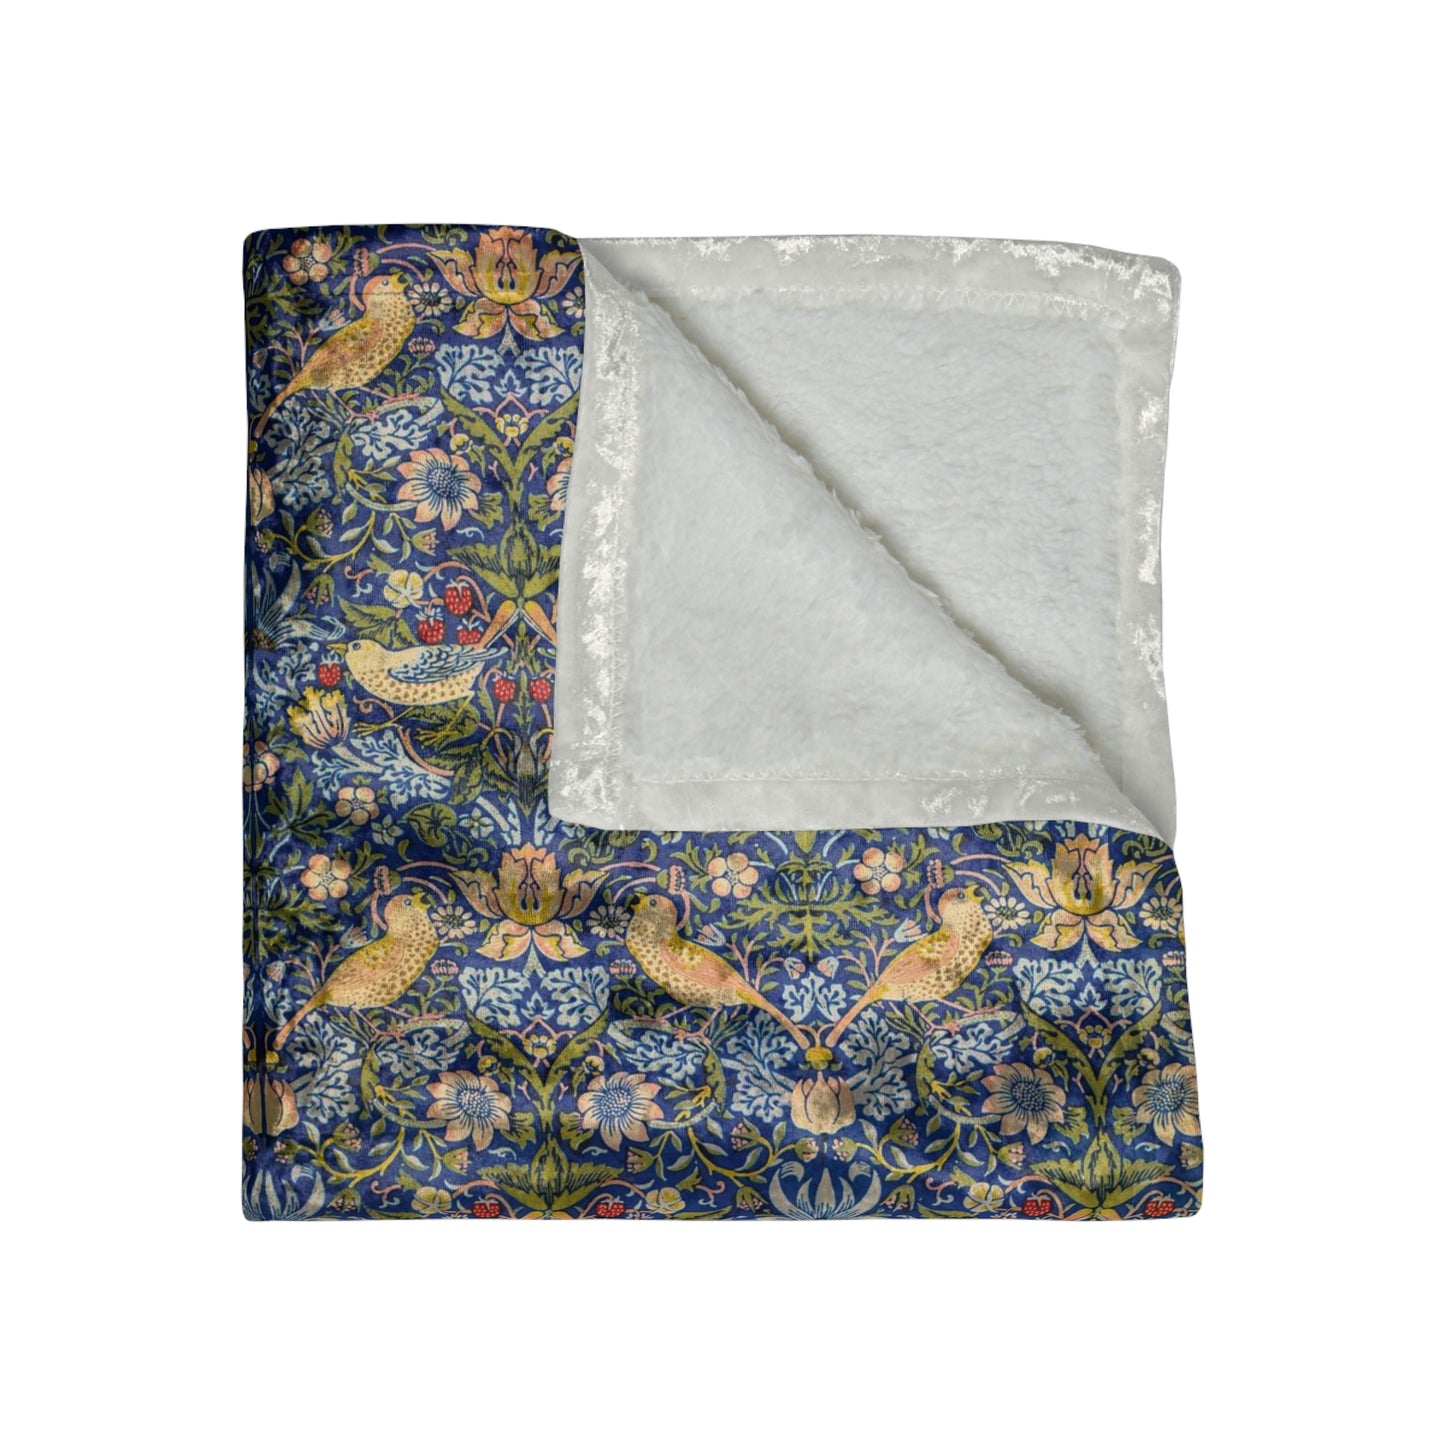 William Morris & Co Lush Crushed Velvet Blanket - Strawberry Collection (Indigo)